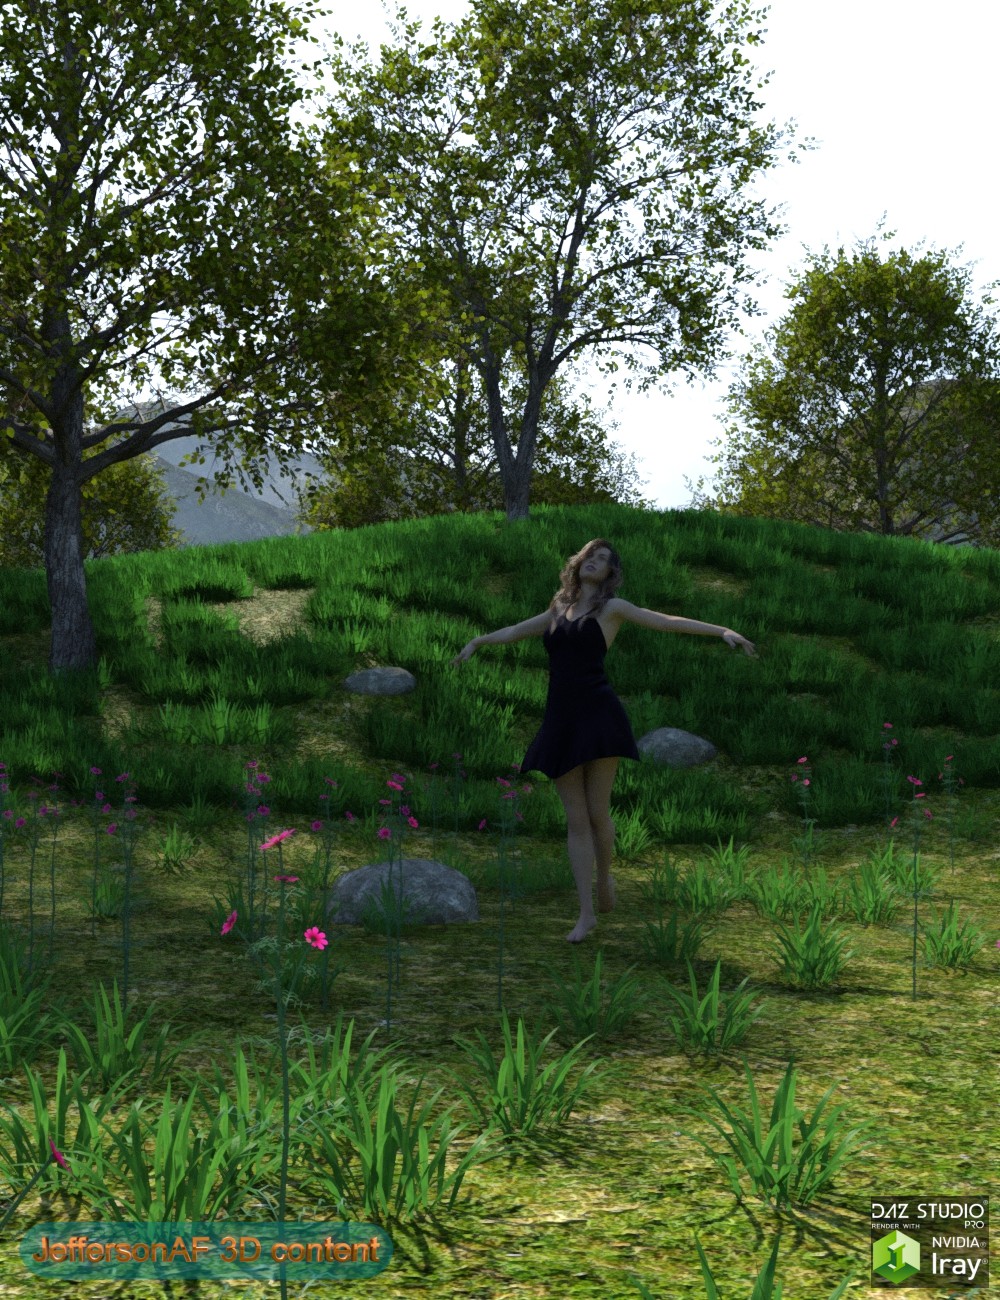 Grassy Hills by: JeffersonAF, 3D Models by Daz 3D